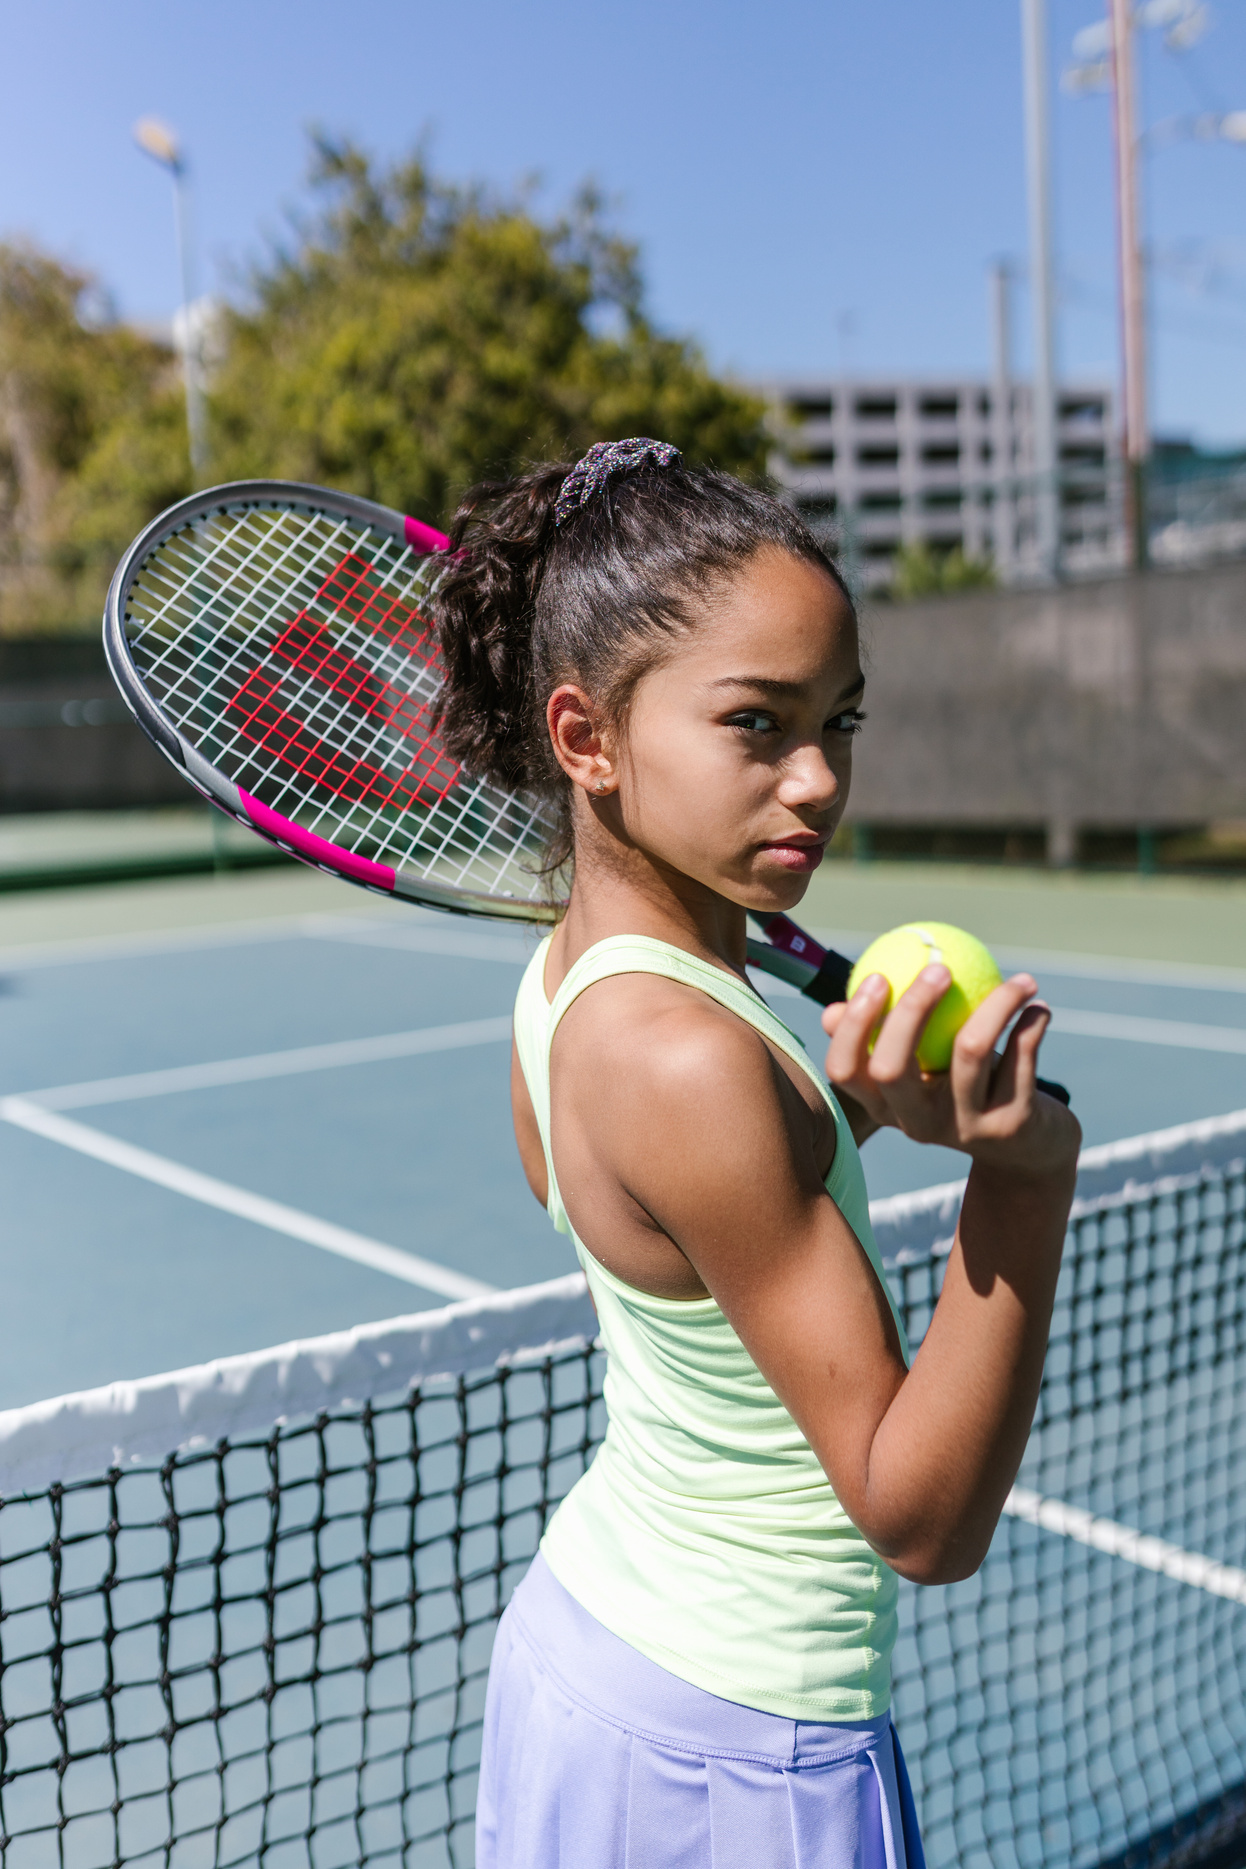 Girl Holding a Tennis Racket and Tennis Ball